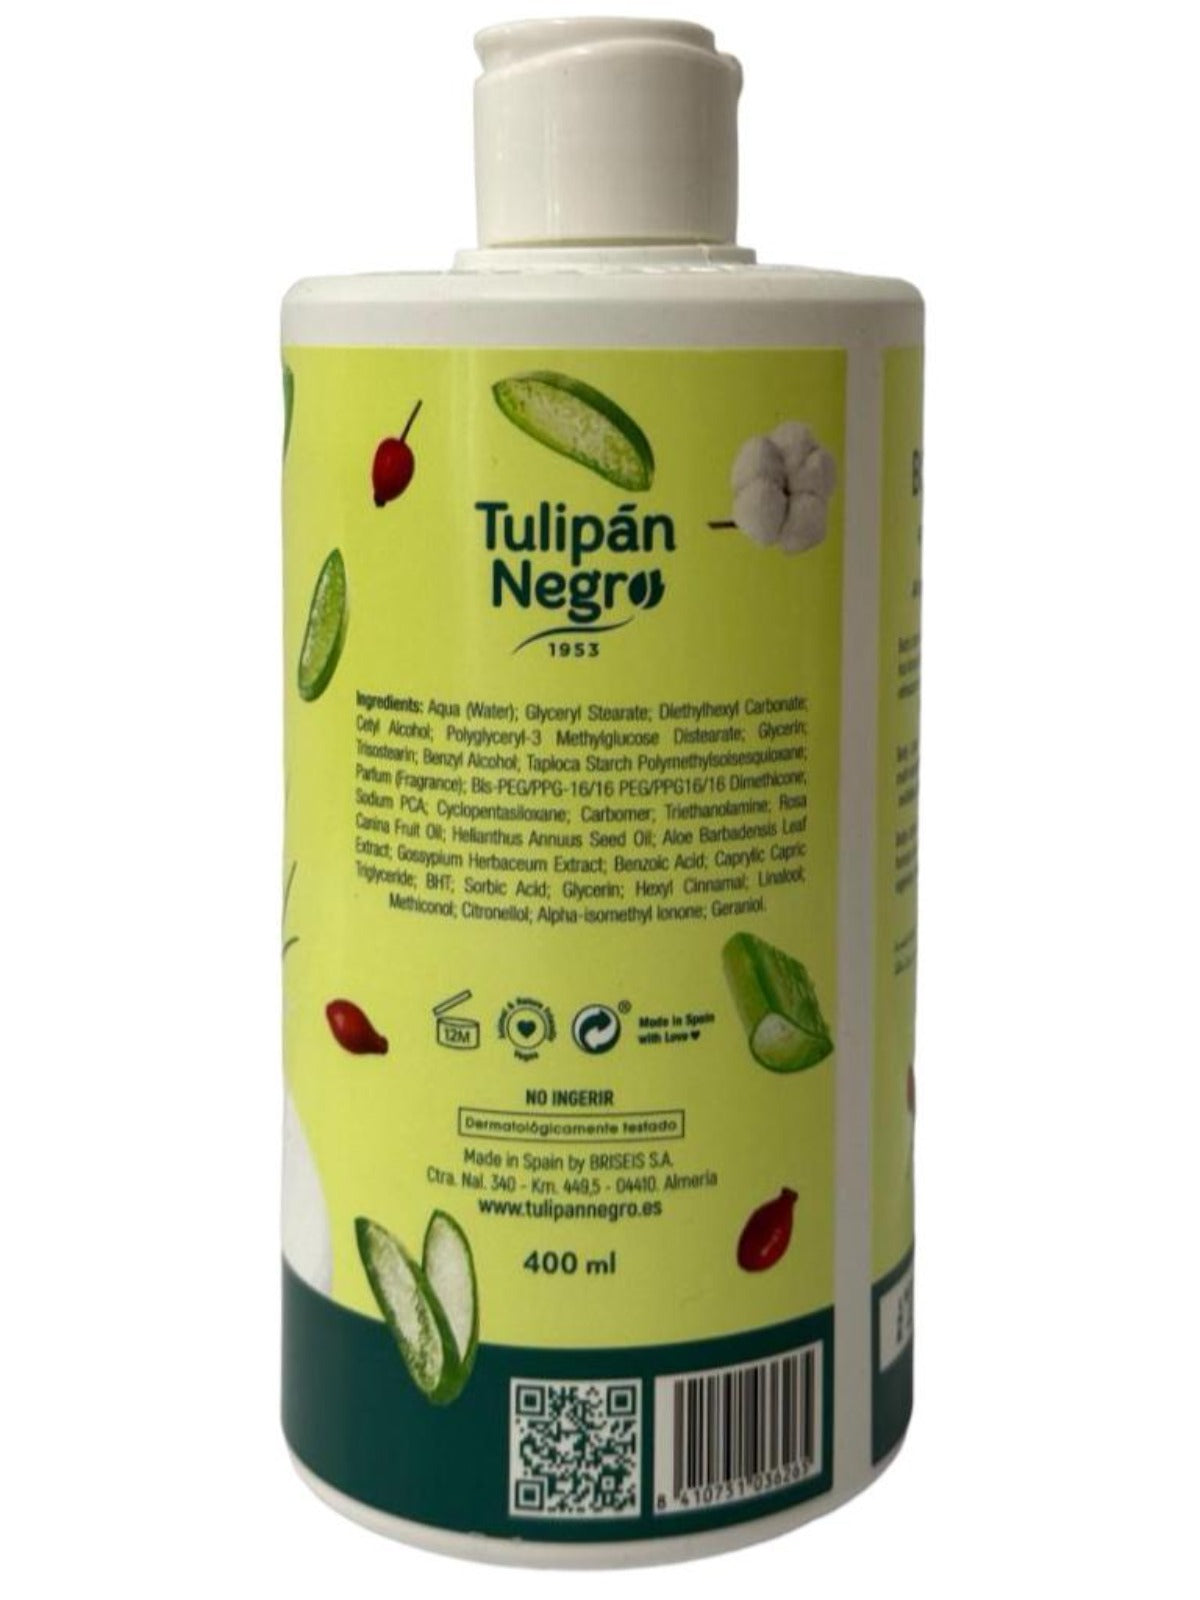 Tulipan Negro Aloe Vera, Cotton and Rosehip Extract Spanish Body Lotion 400ml